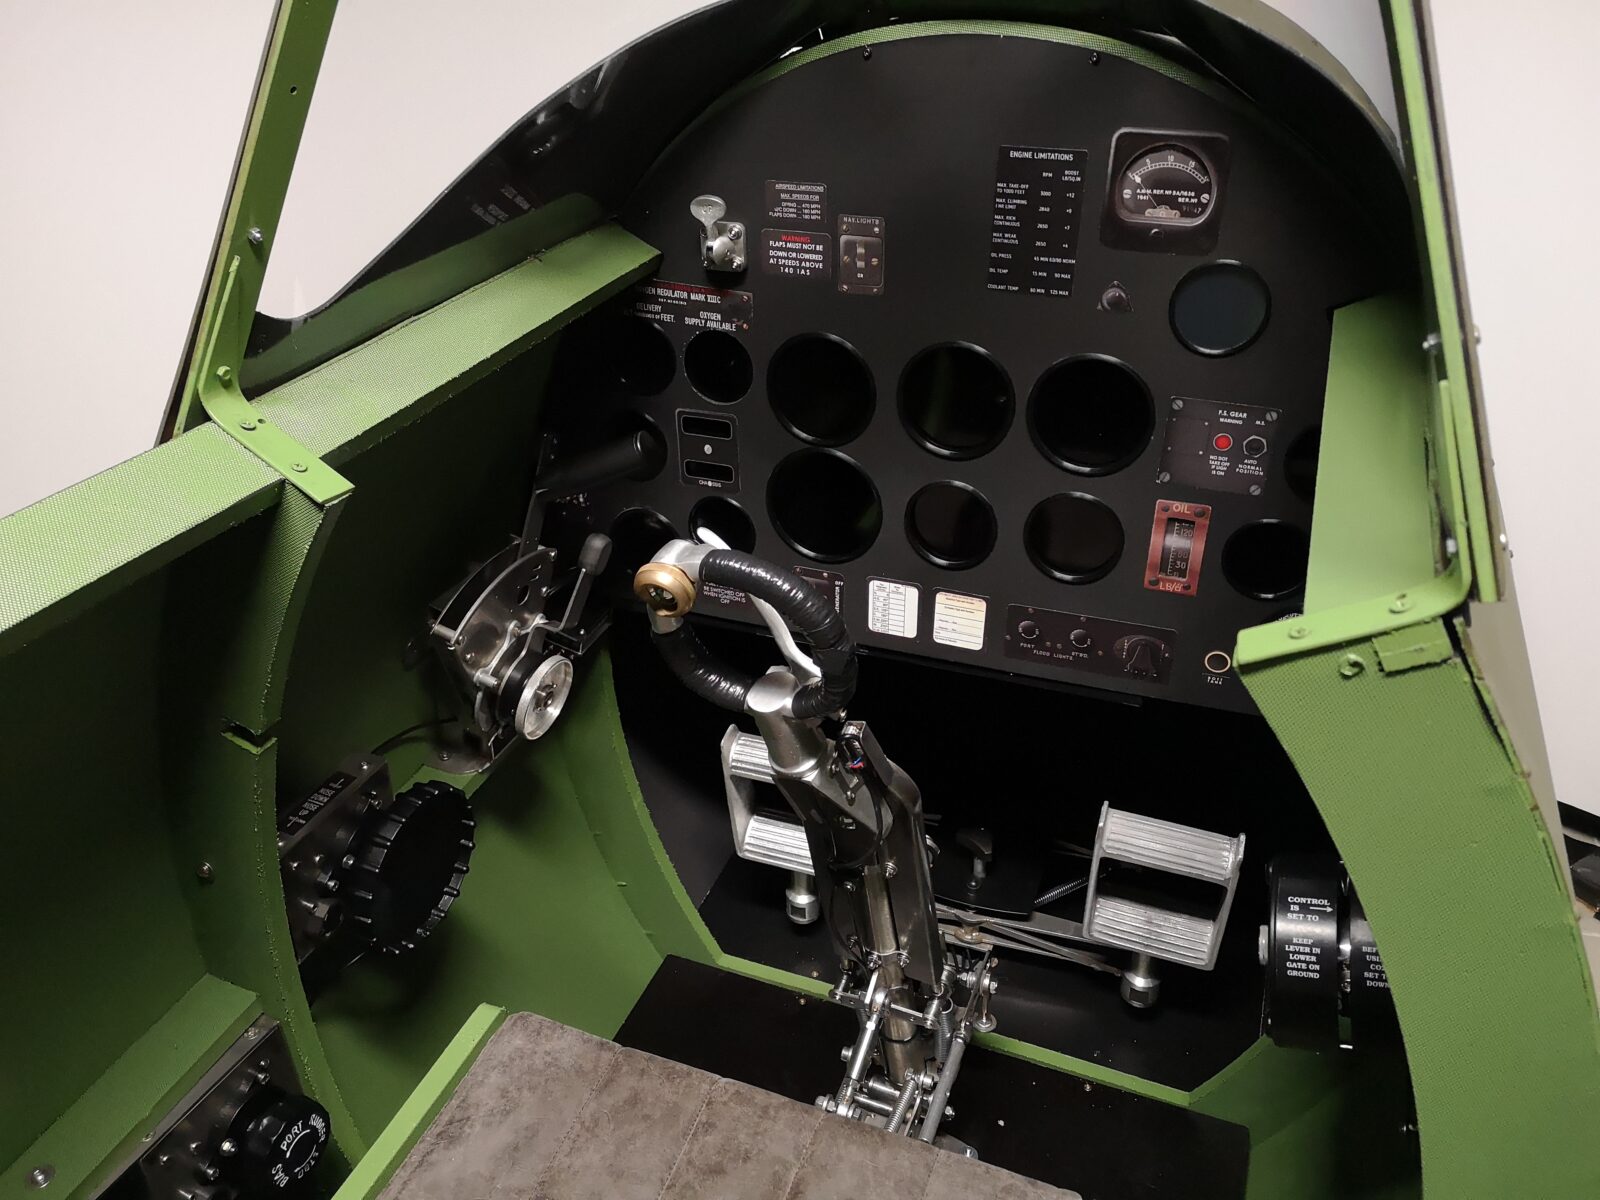 spitfire cockpit simulator